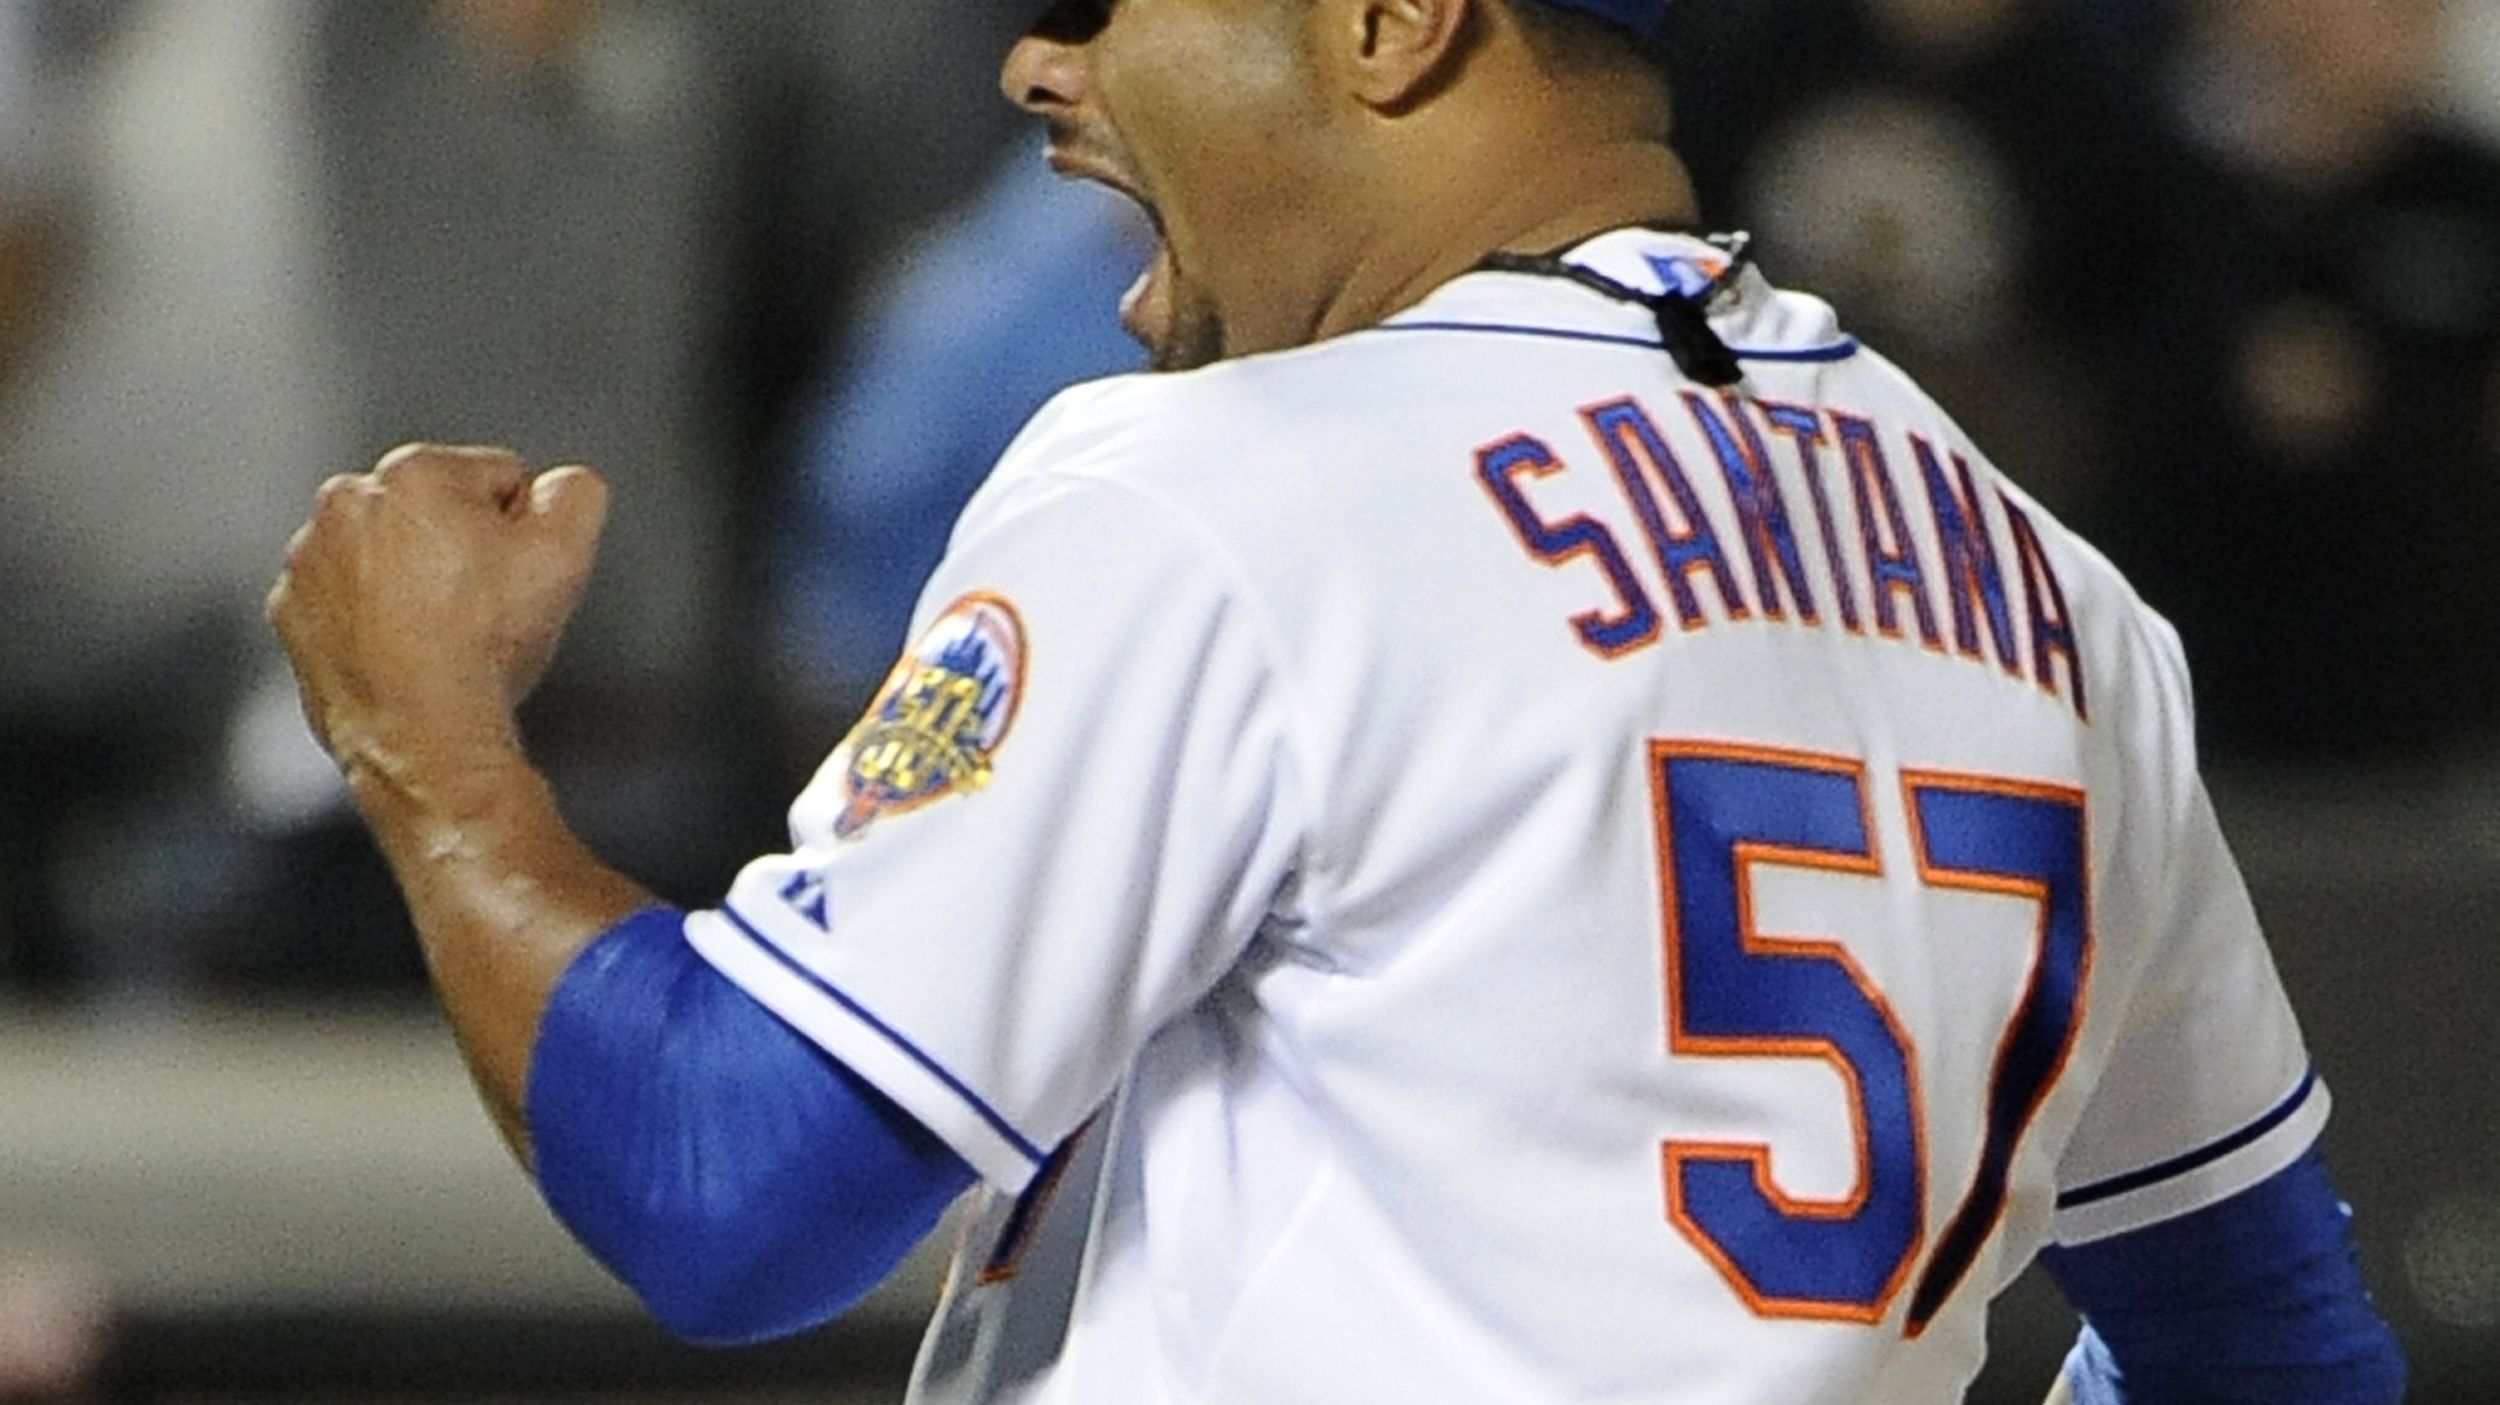 On 10th anniversary of no-hitter, Johan Santana glad Mets manager